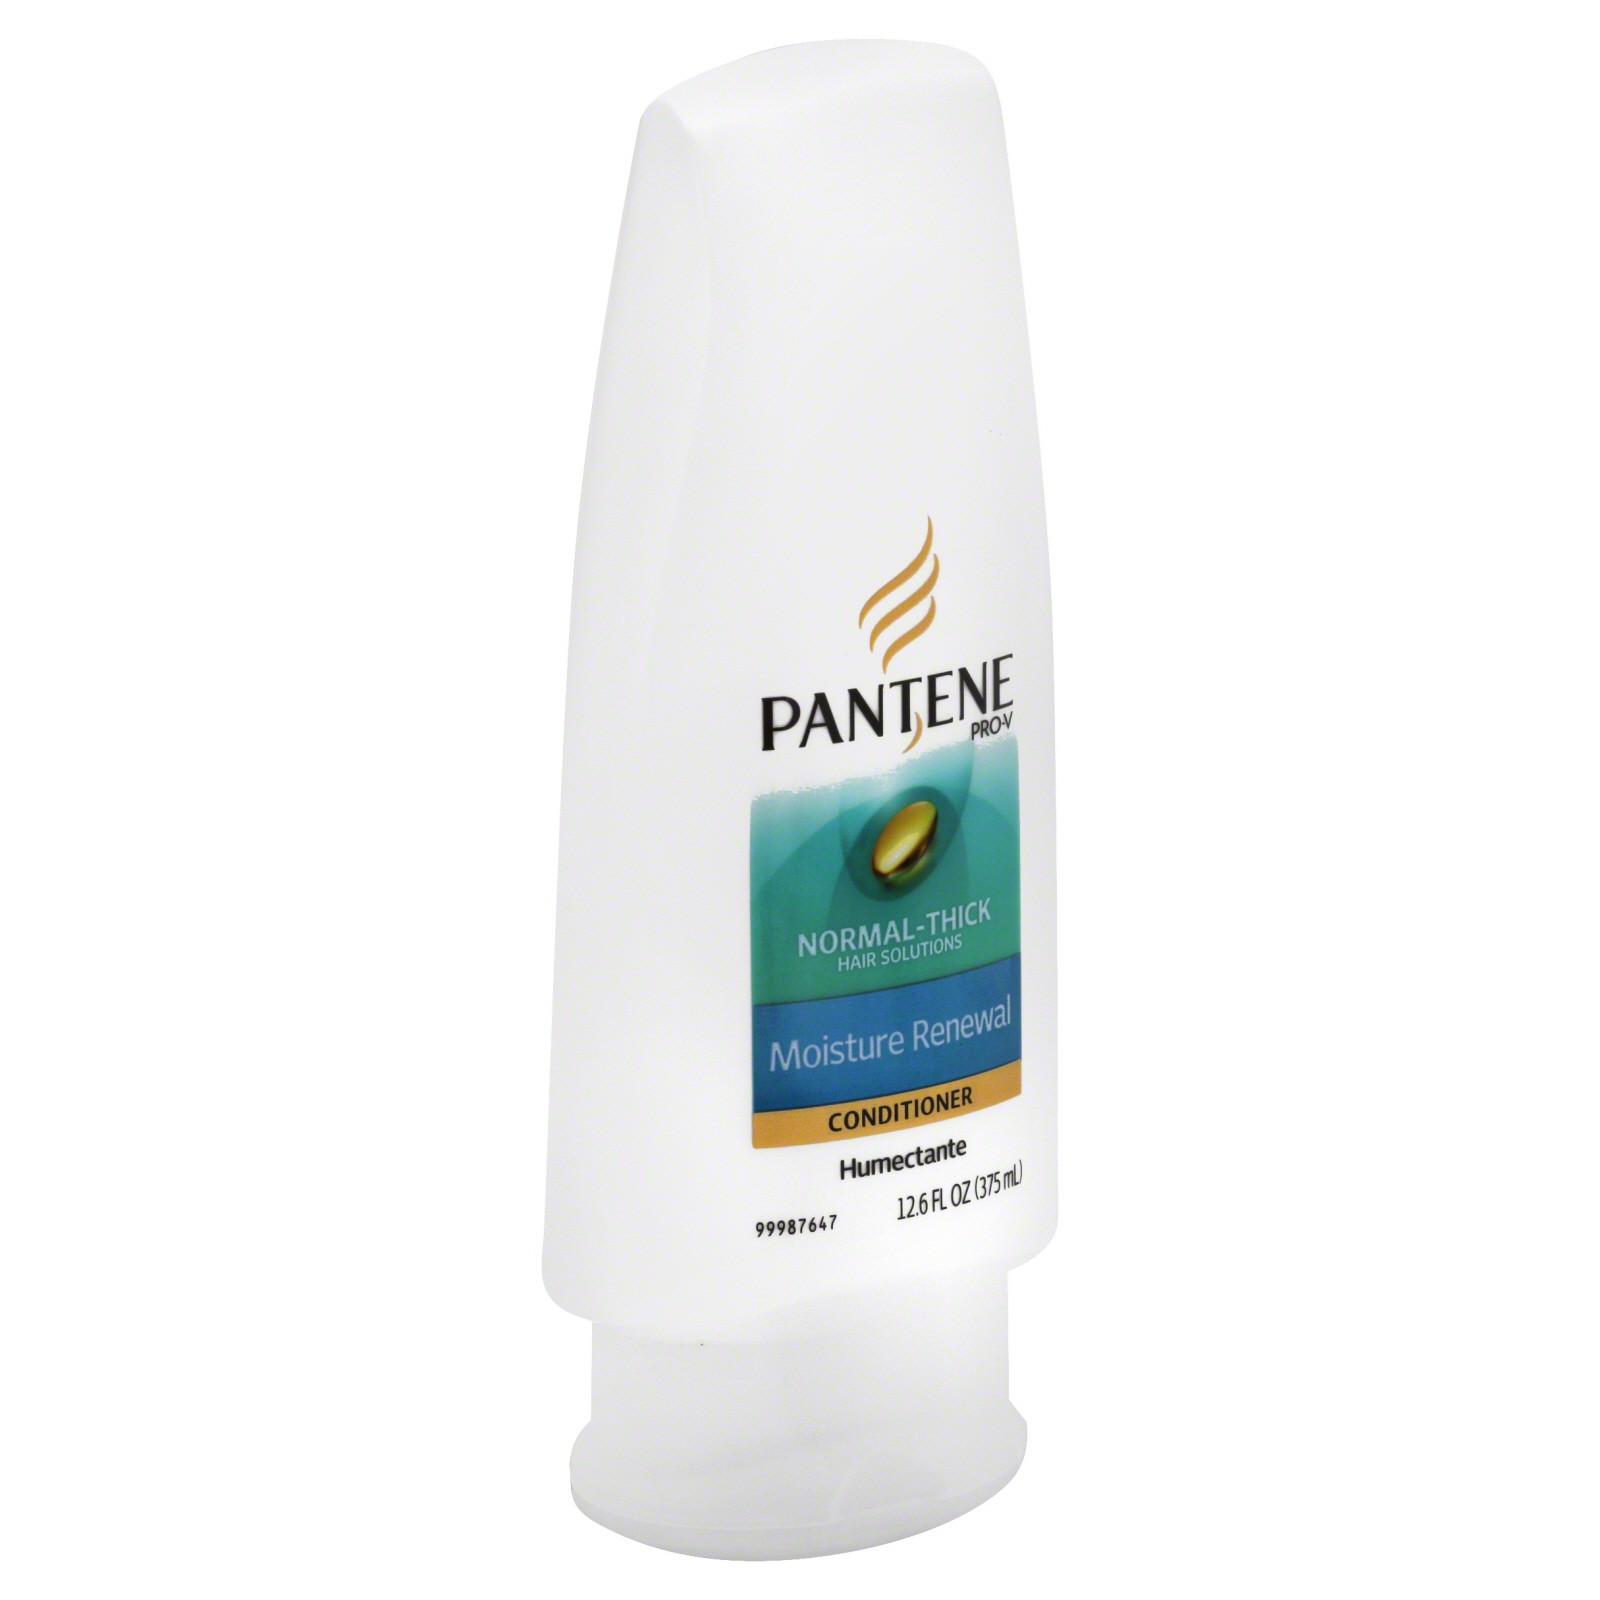 Pantene Pro-V Medium-Thick Hair Solutions Conditioner, Dry to Moisturized, 12.6 fl oz (375 ml)